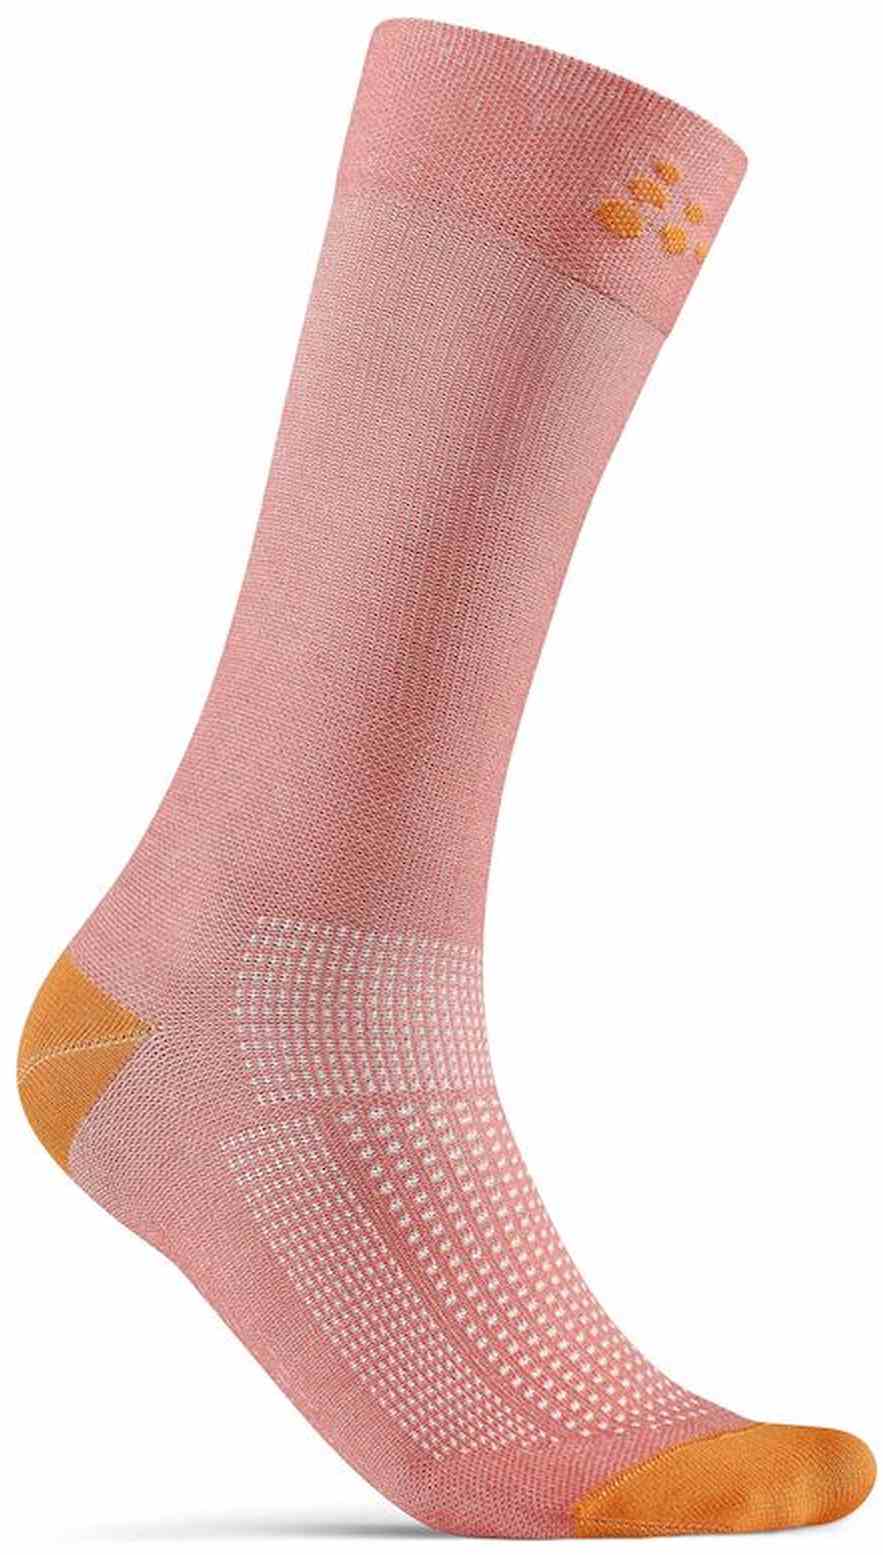 Functional cycling socks